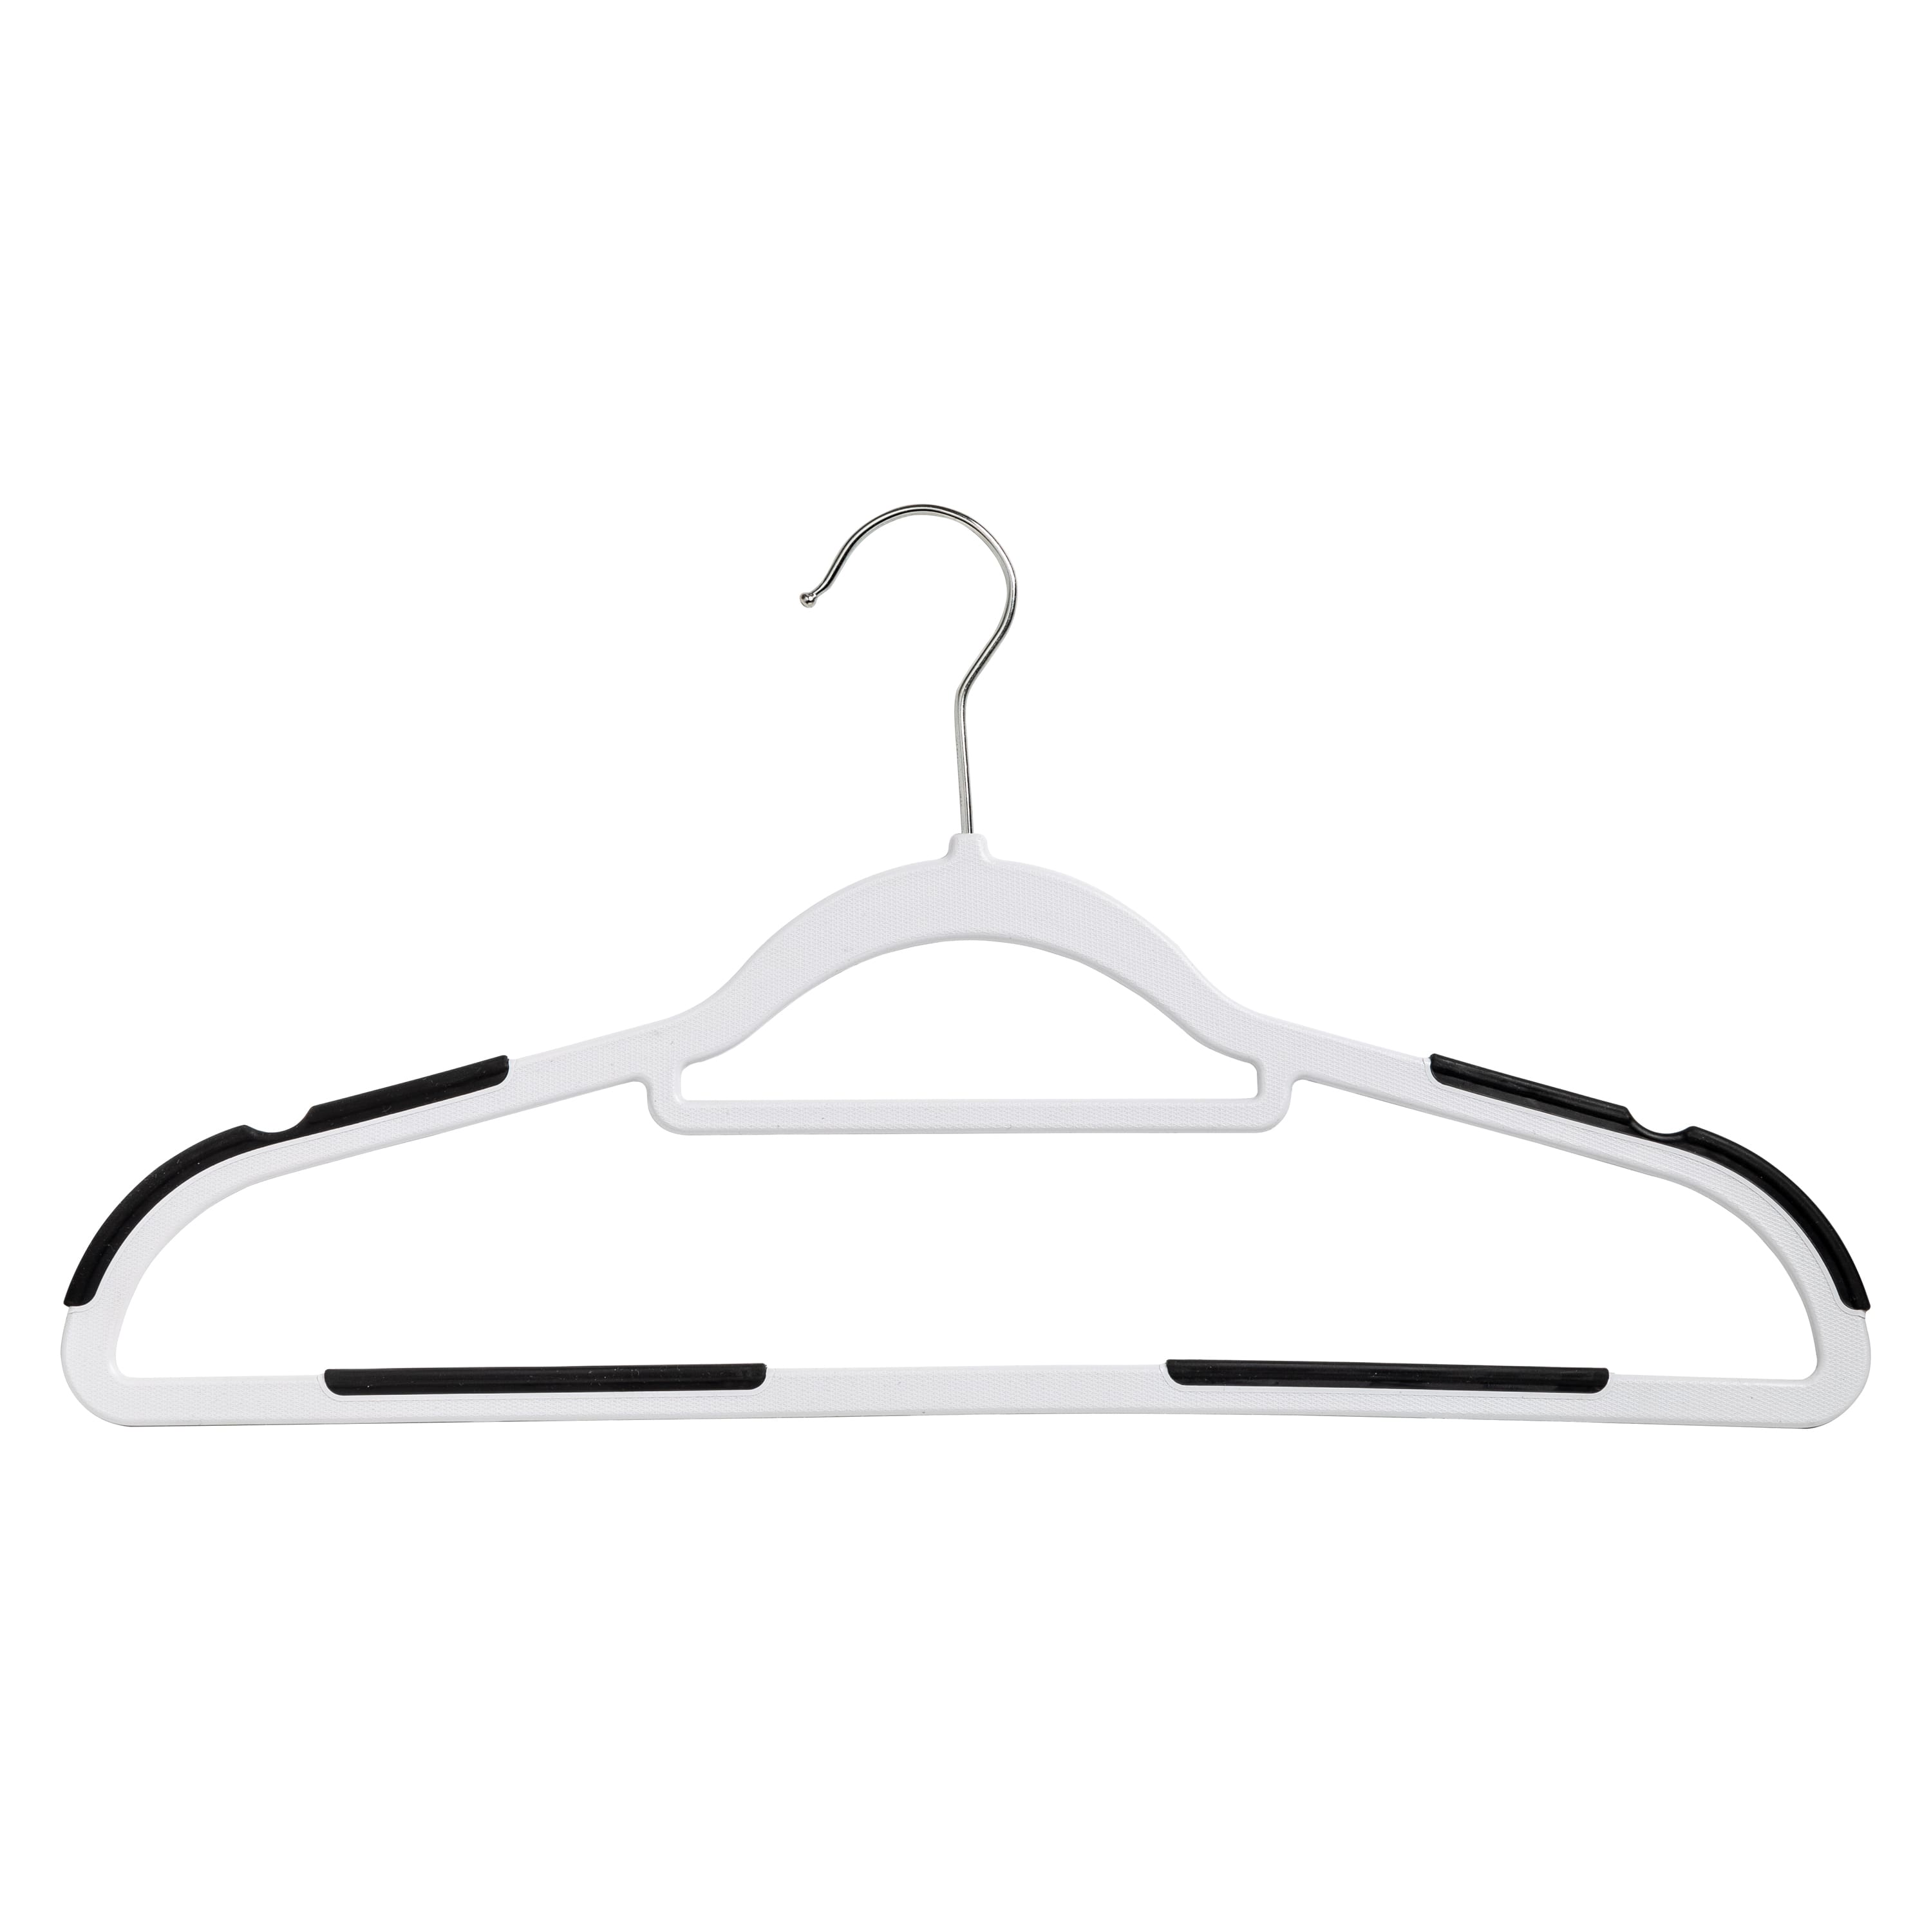 Hanger Grip Rubber Black Non Slip Strip Accessories for Plastic Wood Hangers 